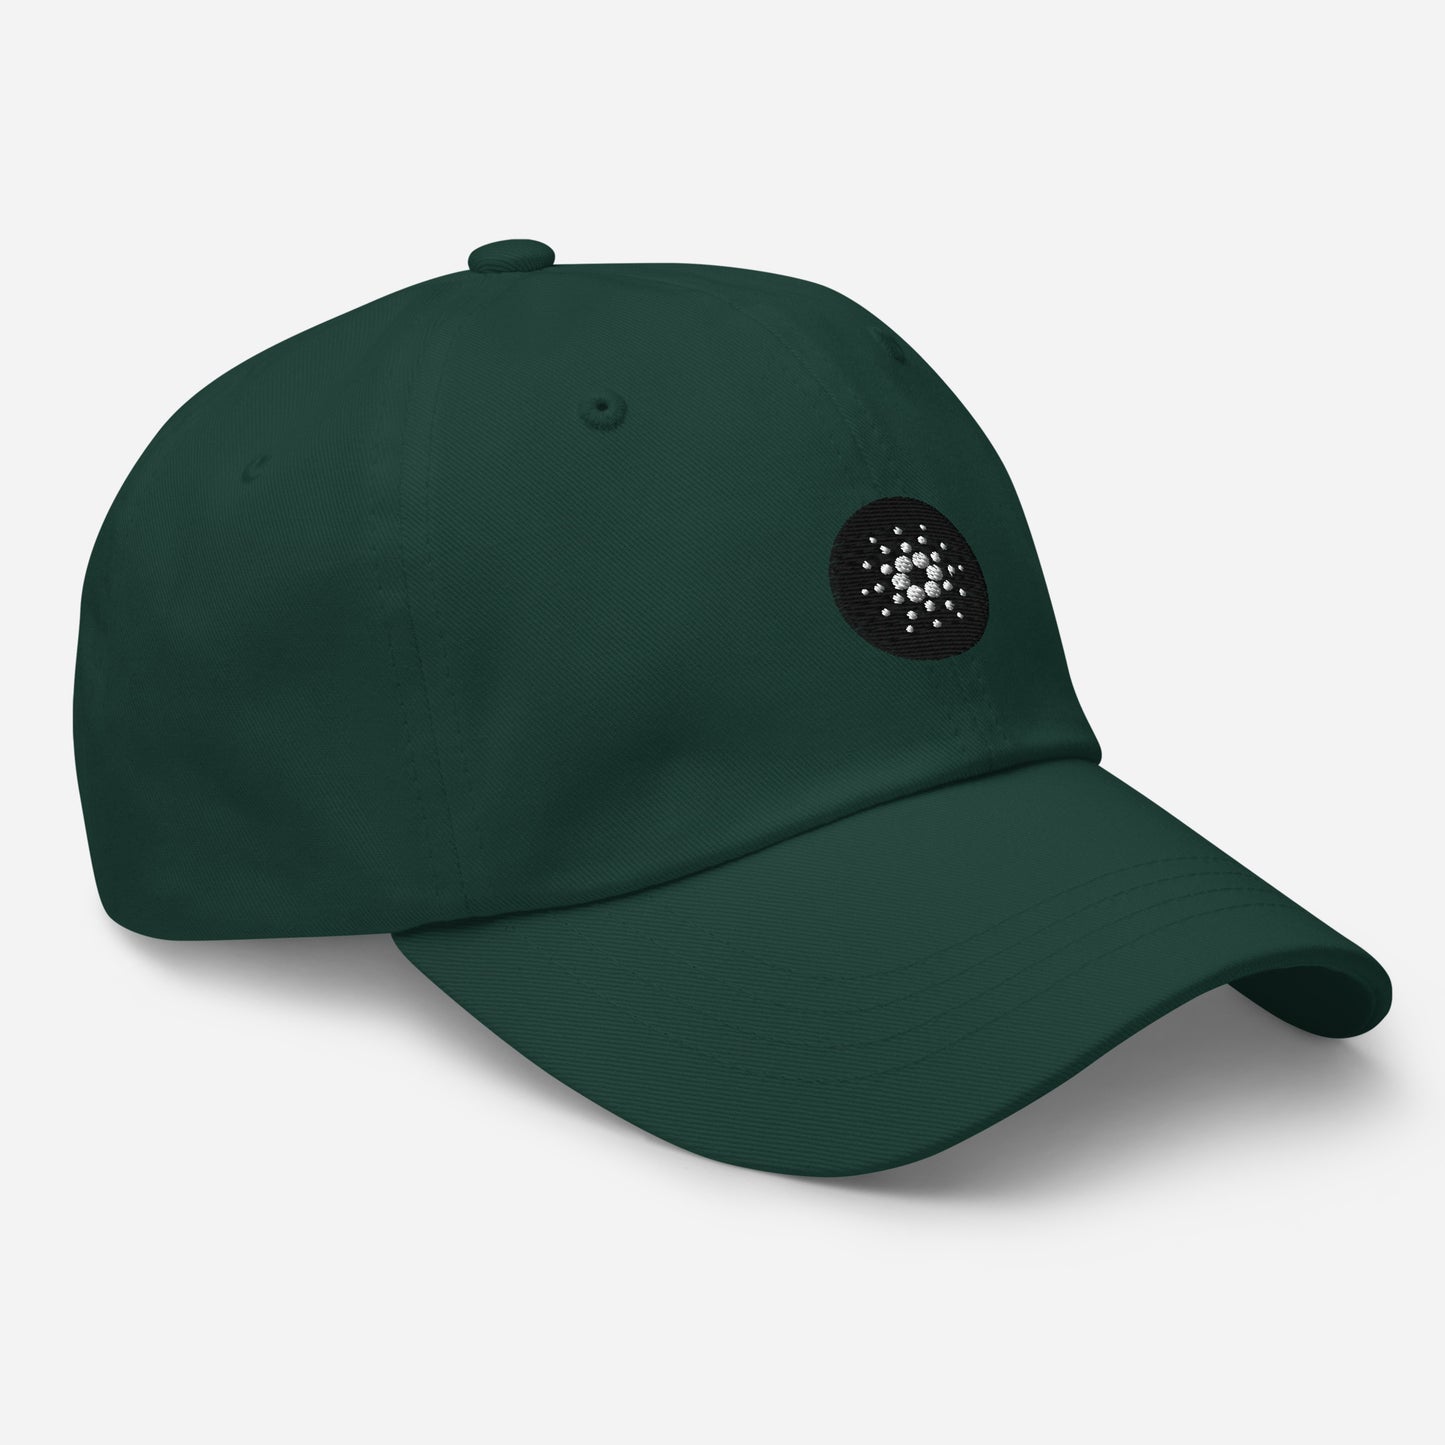 CARDANO (ADA) - Fitted baseball cap